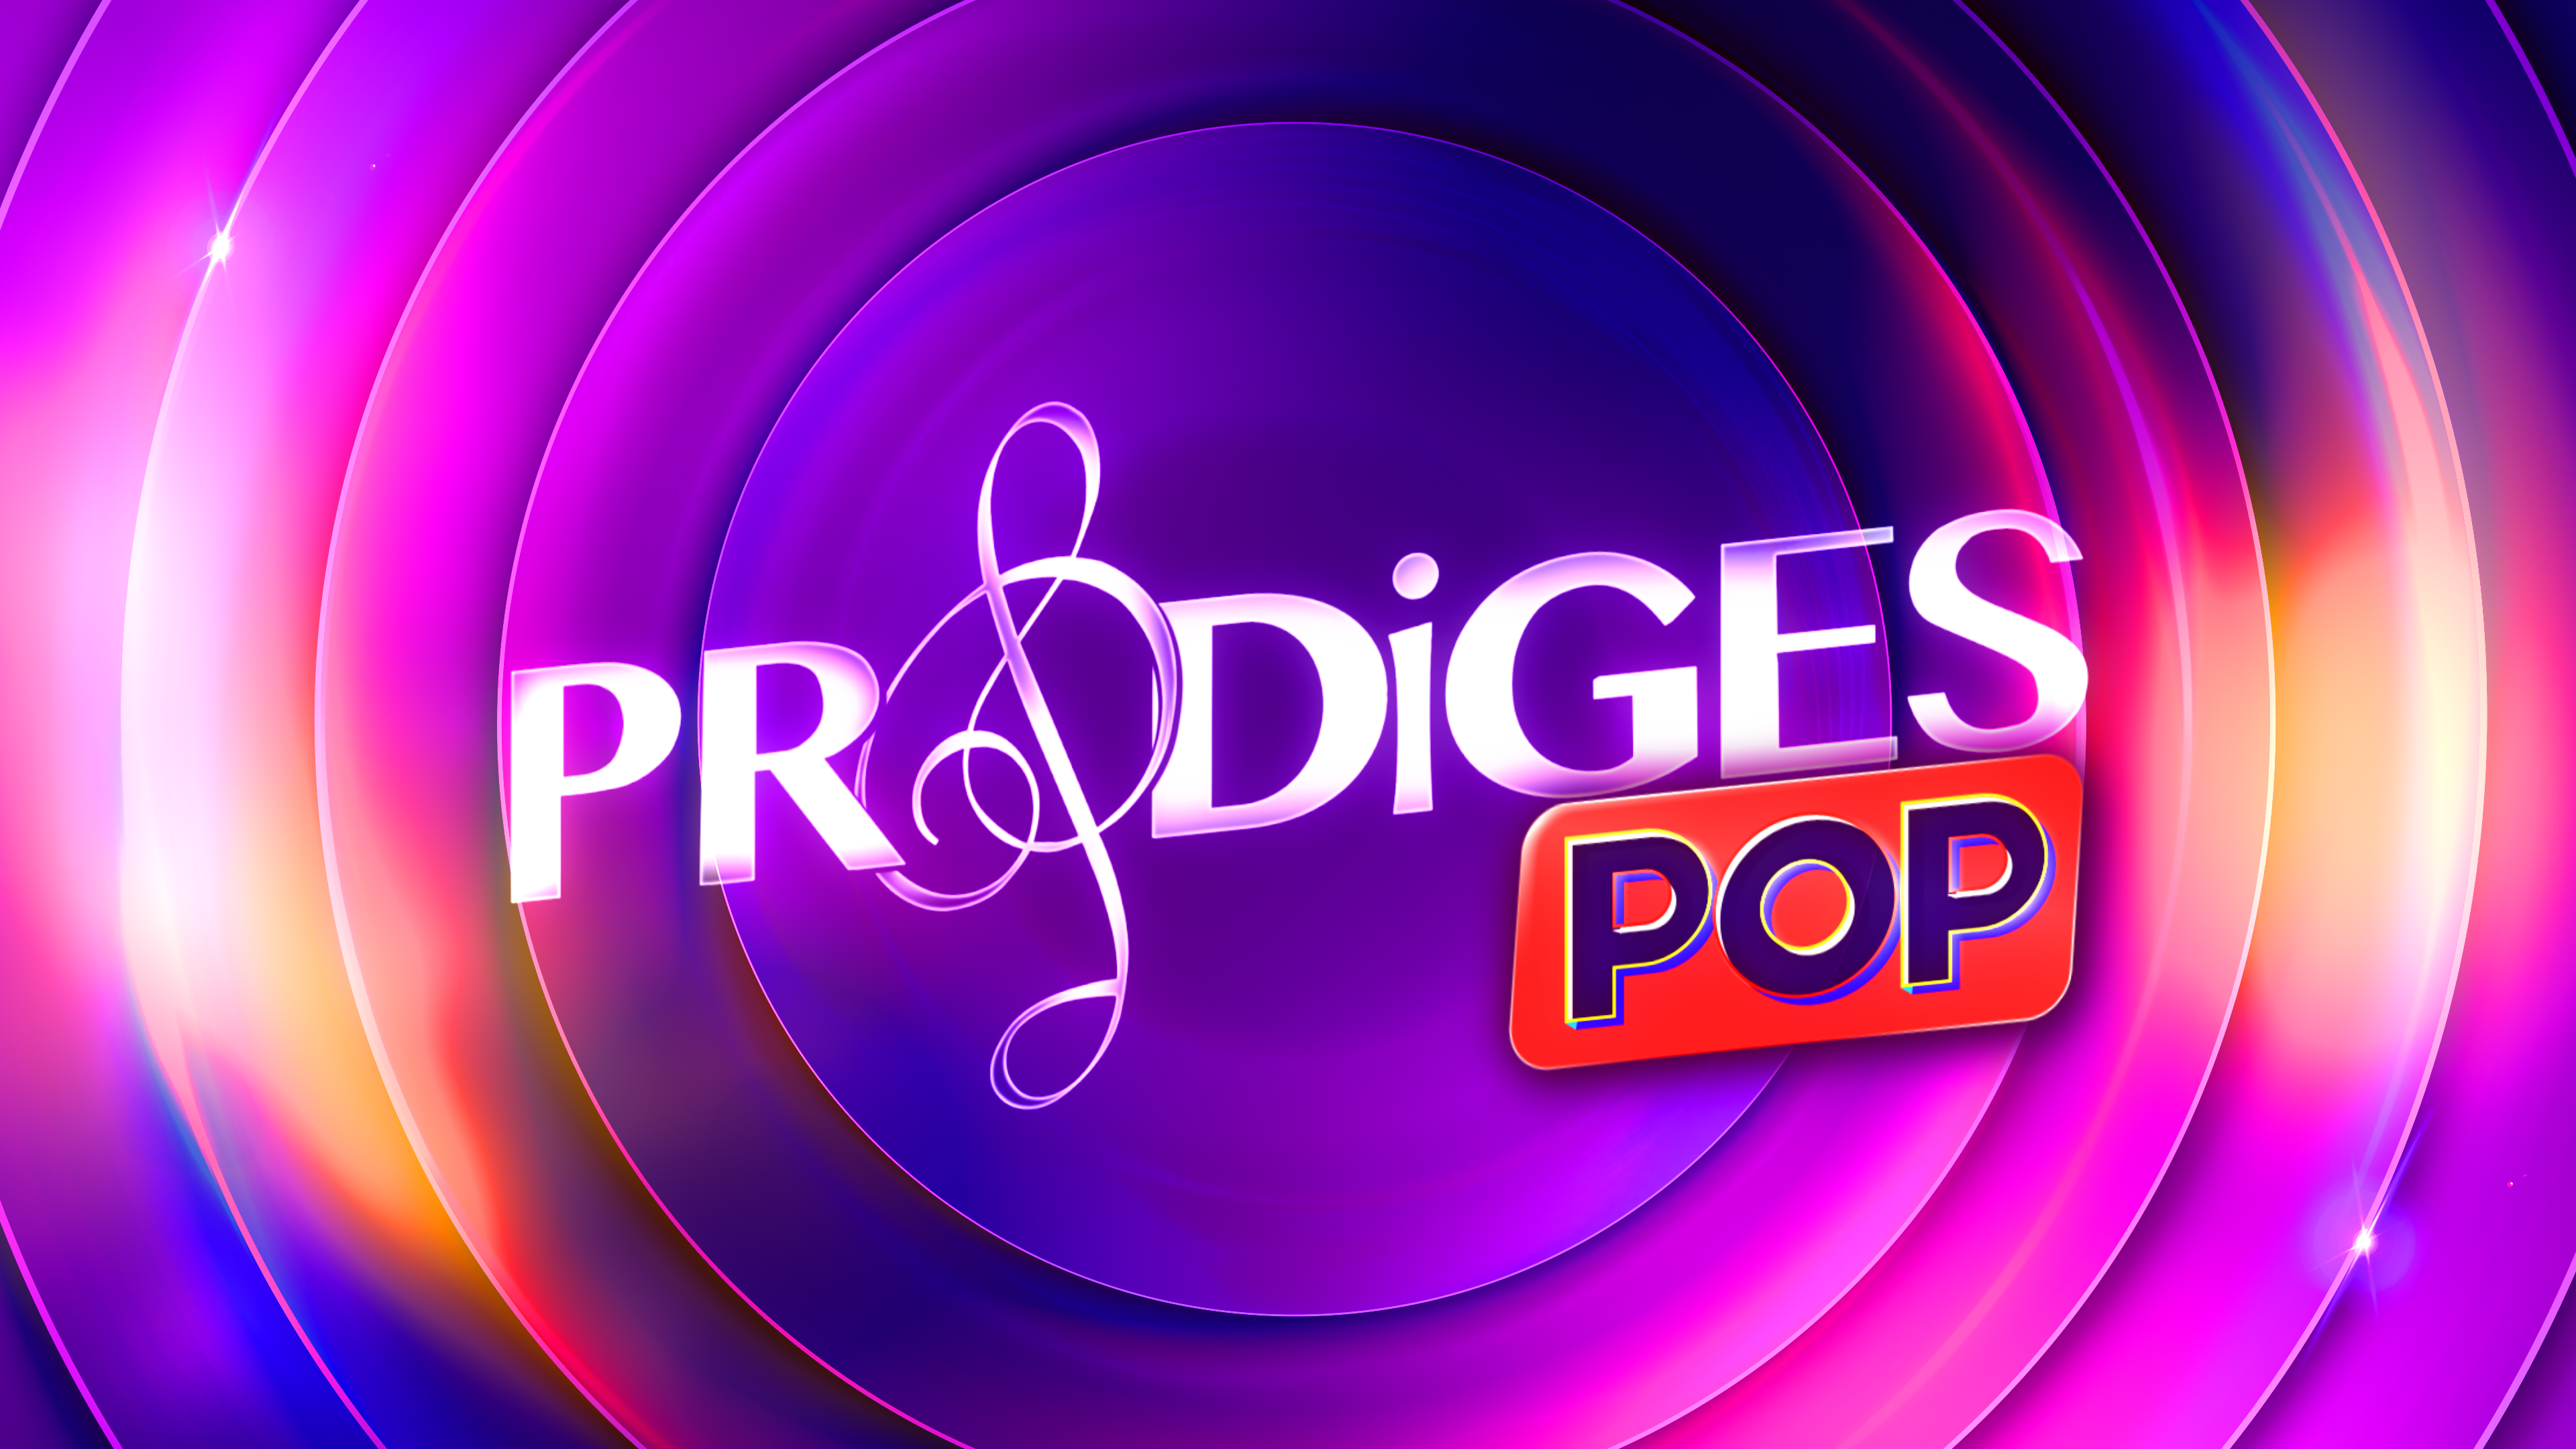 Prodiges pop